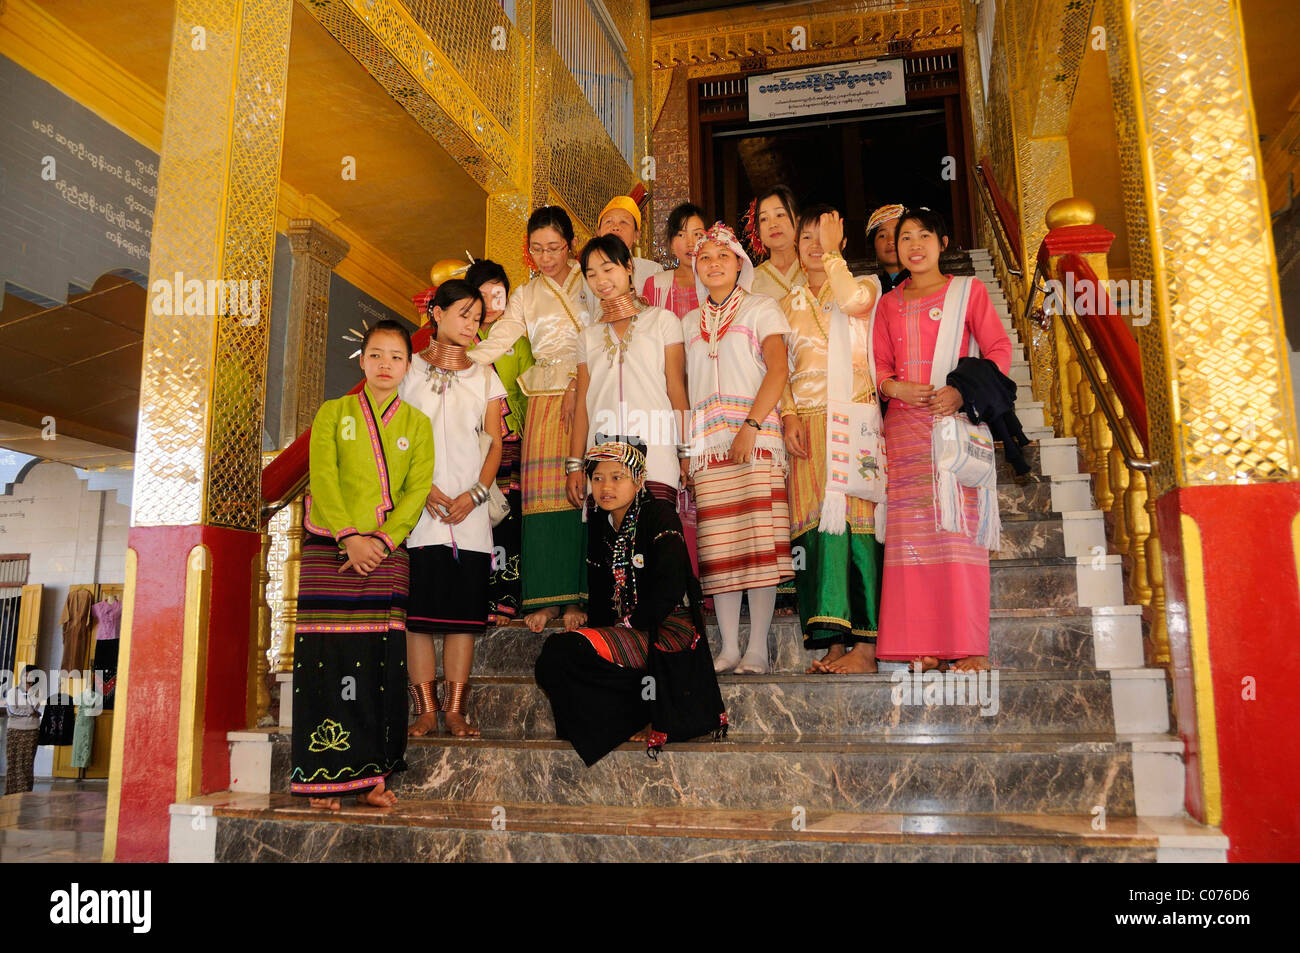 Members of an ethnic minority in traditional costume, Myanmar, Burma, Southeast Asia, Asia Stock Photo